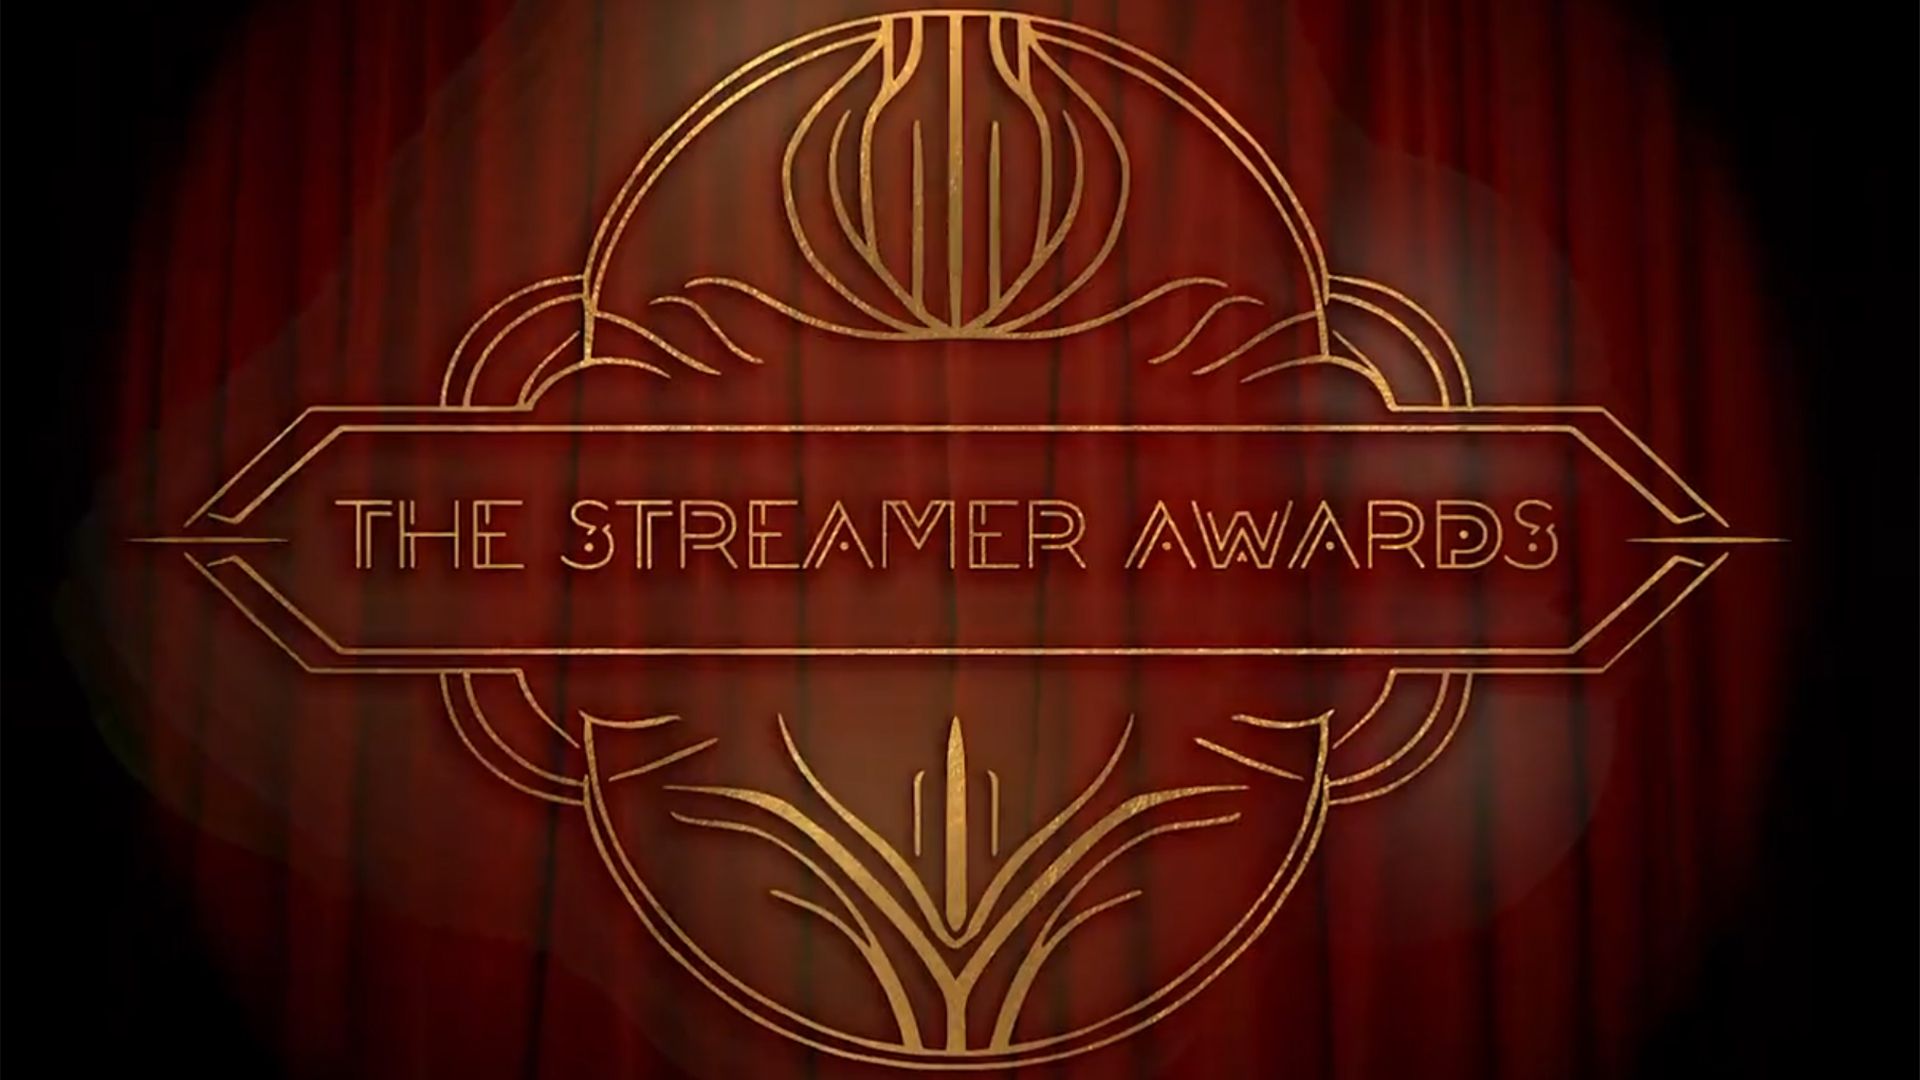 The Streamer Awards - Wikipedia